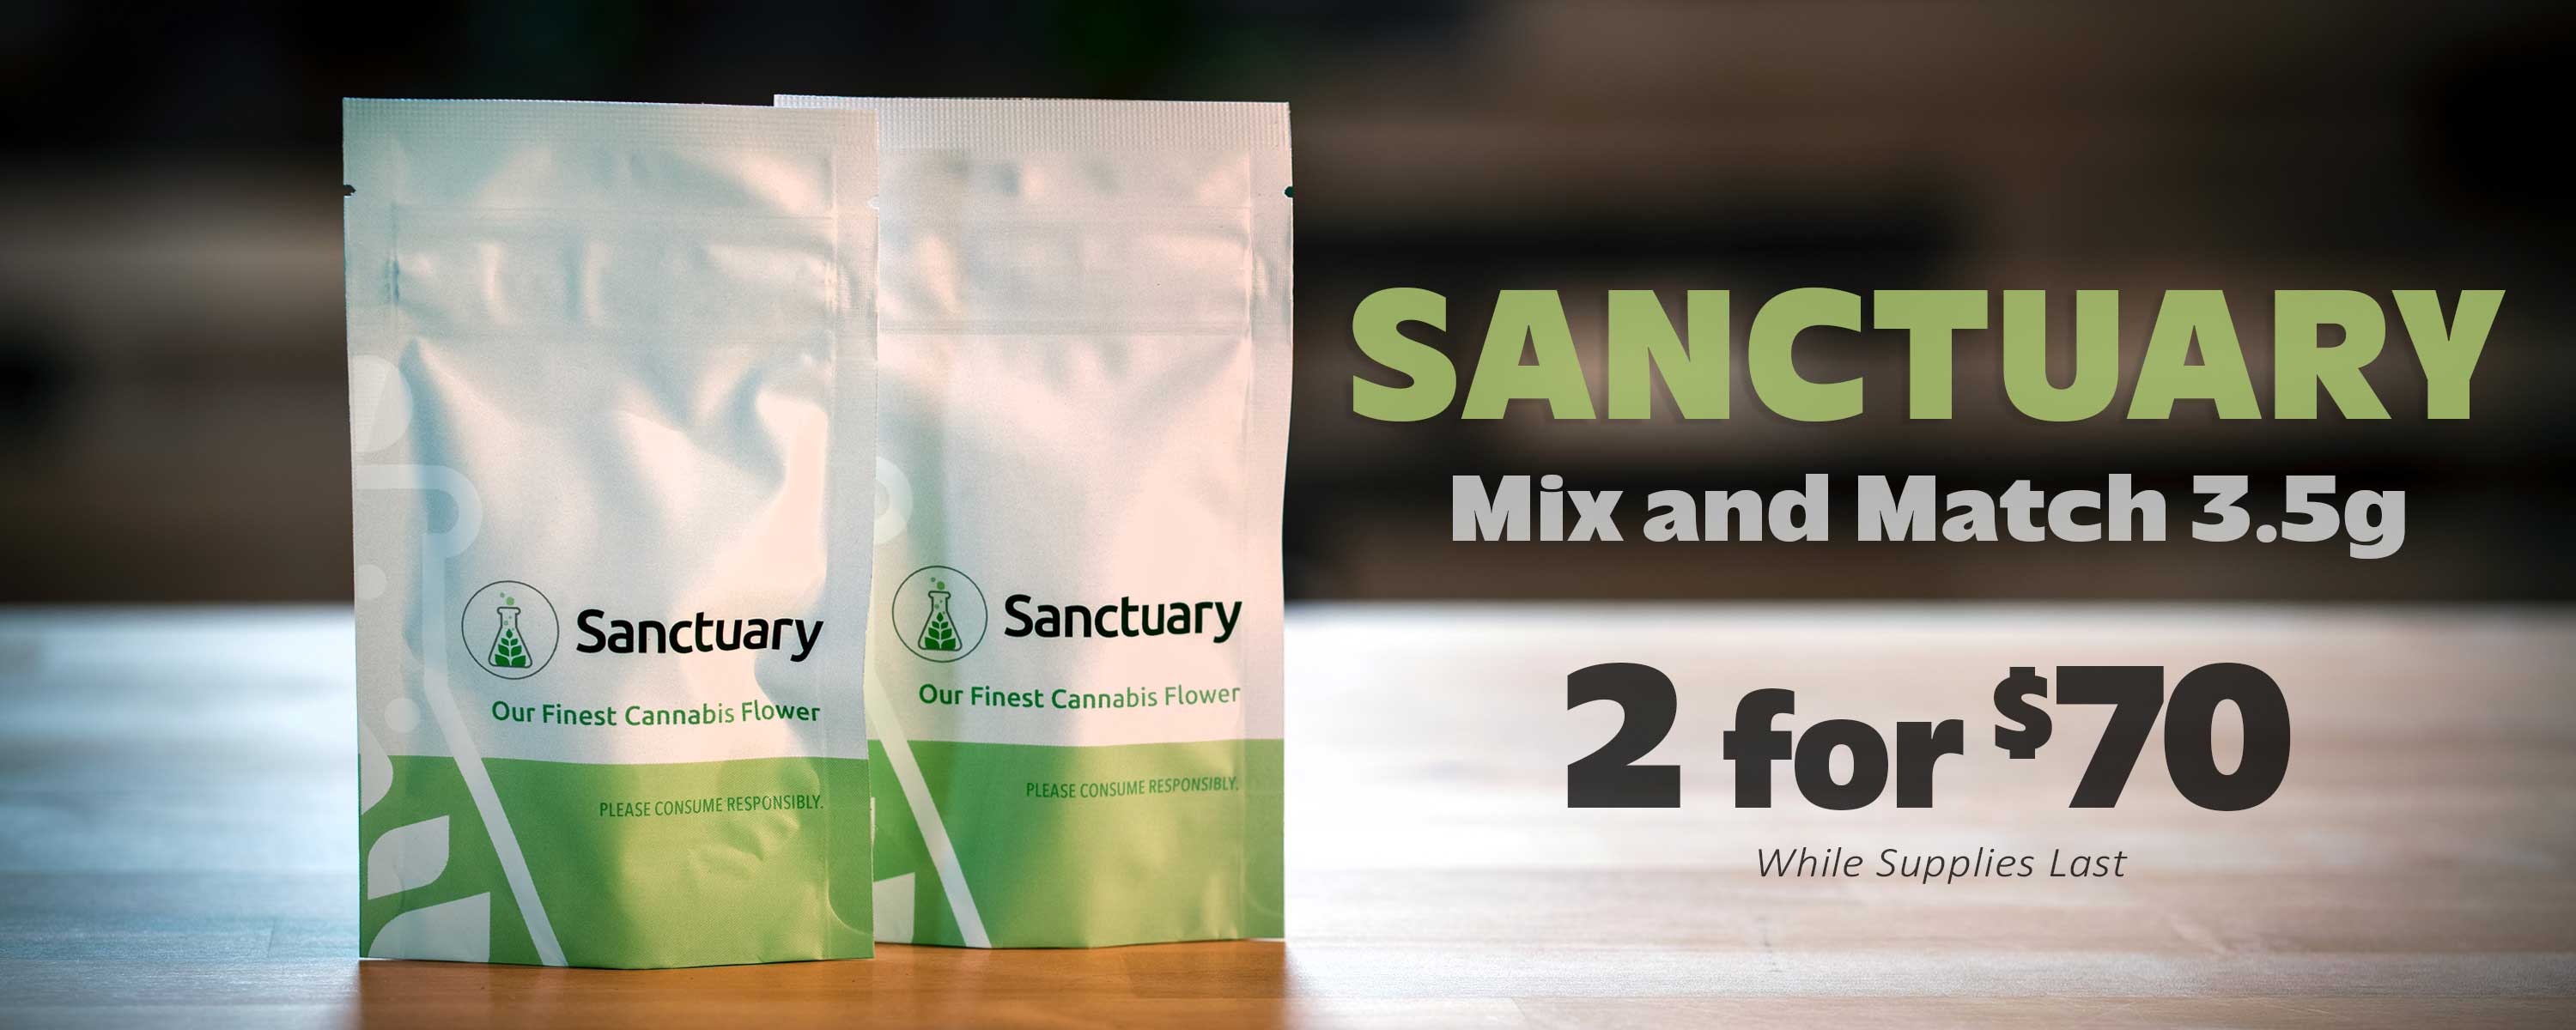 Sanctuary Cannabis Special  - Amesbury MA - Haverhill MA